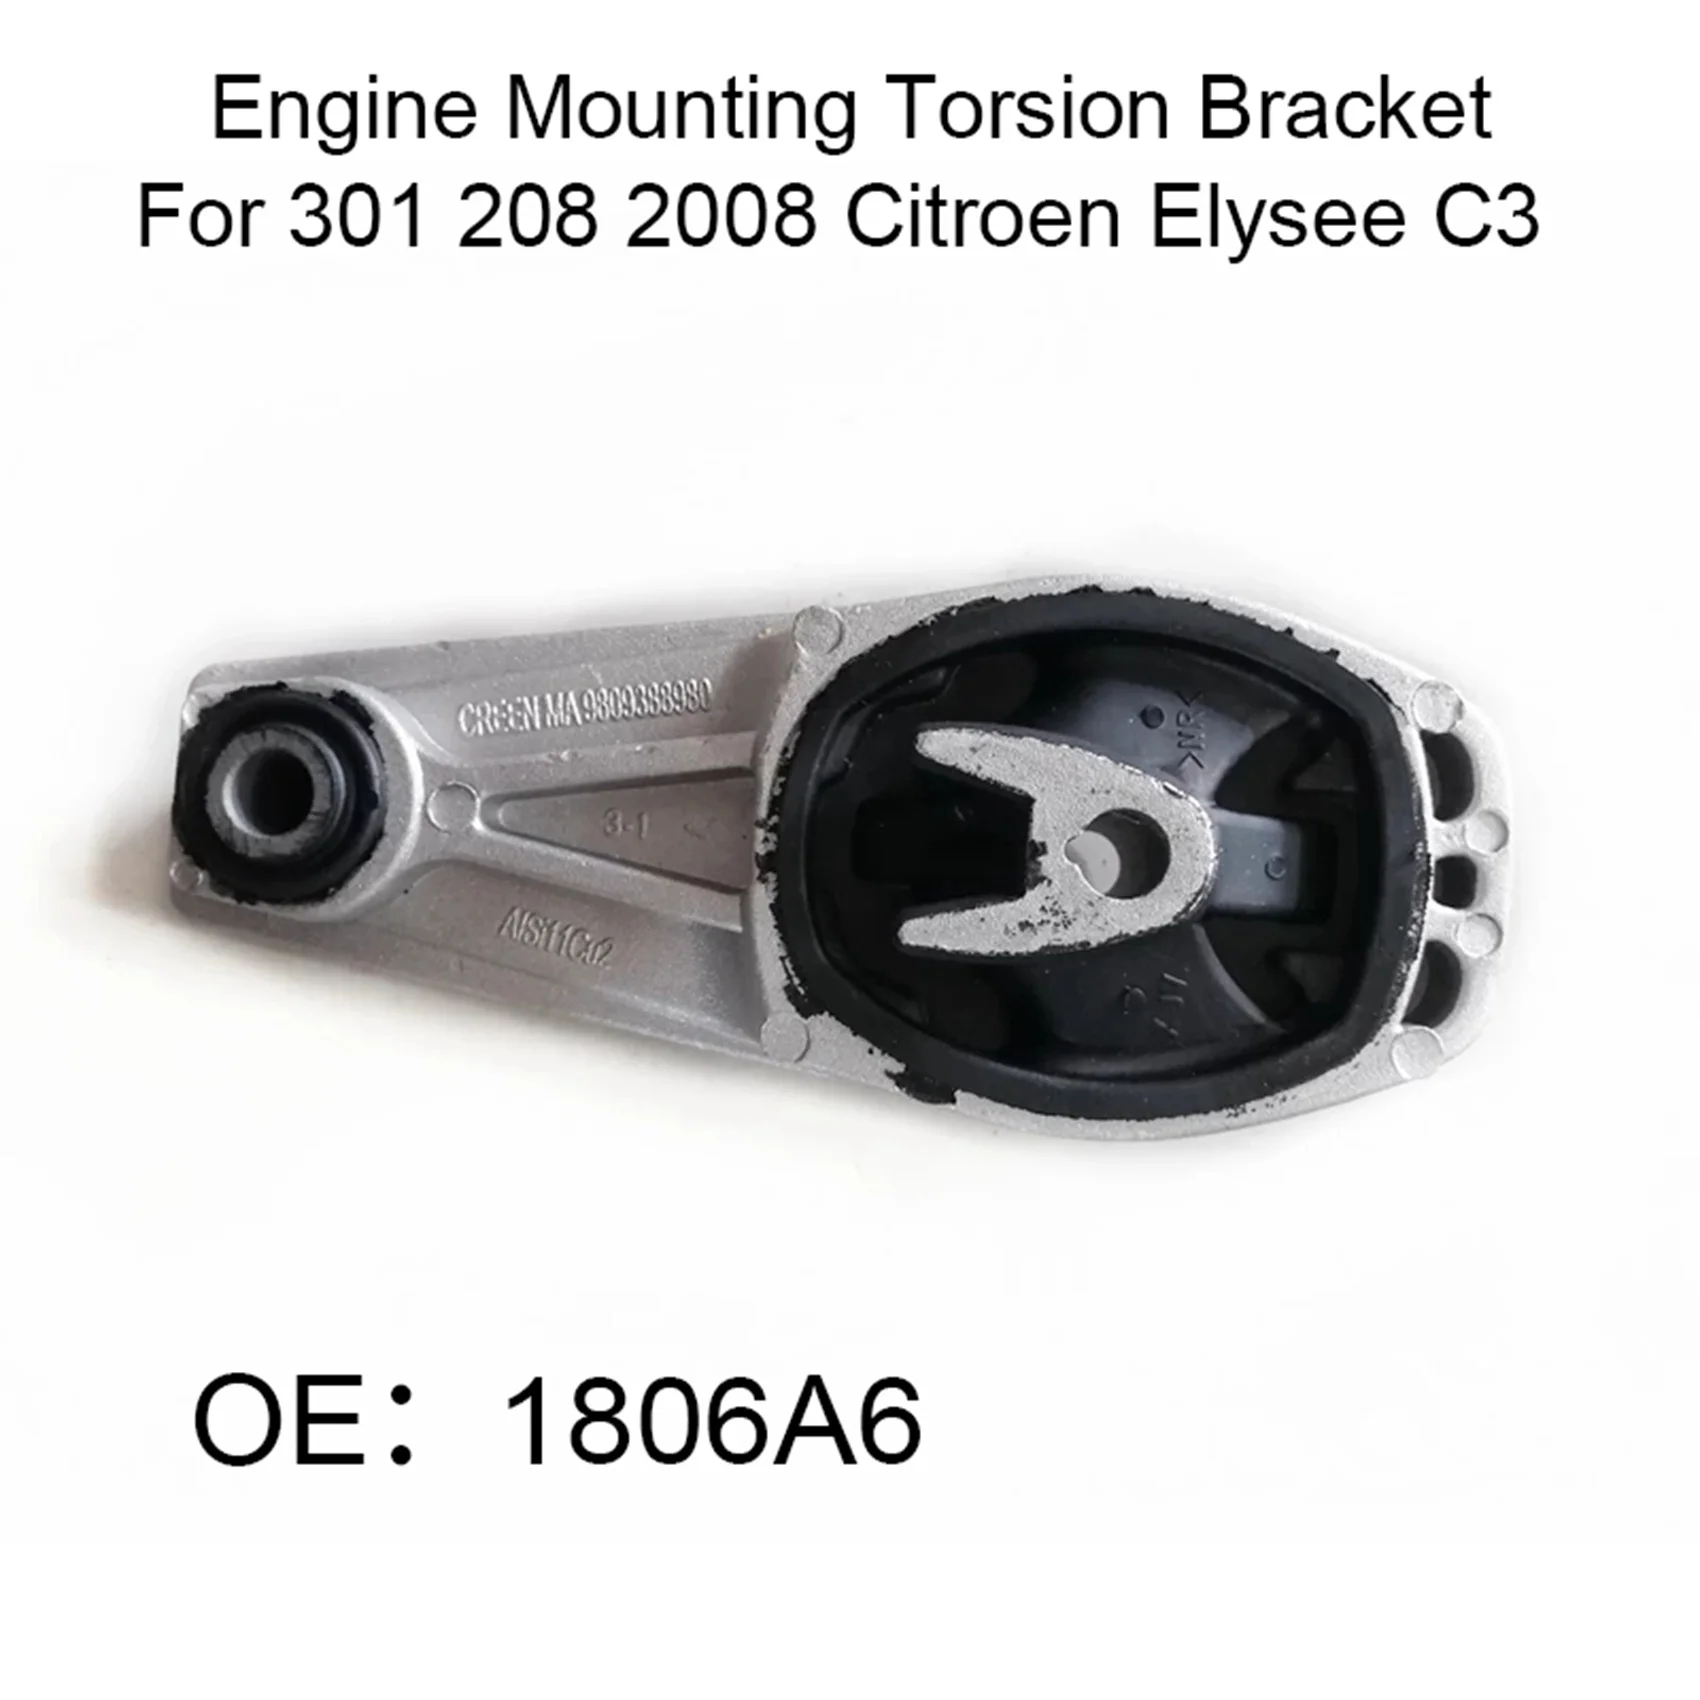 

Кронштейн для двигателя для Peugeot 301 208 207 308 2008 -Citroen Elysee C3 DS3 C4 1806A6 9809388980 9802483780